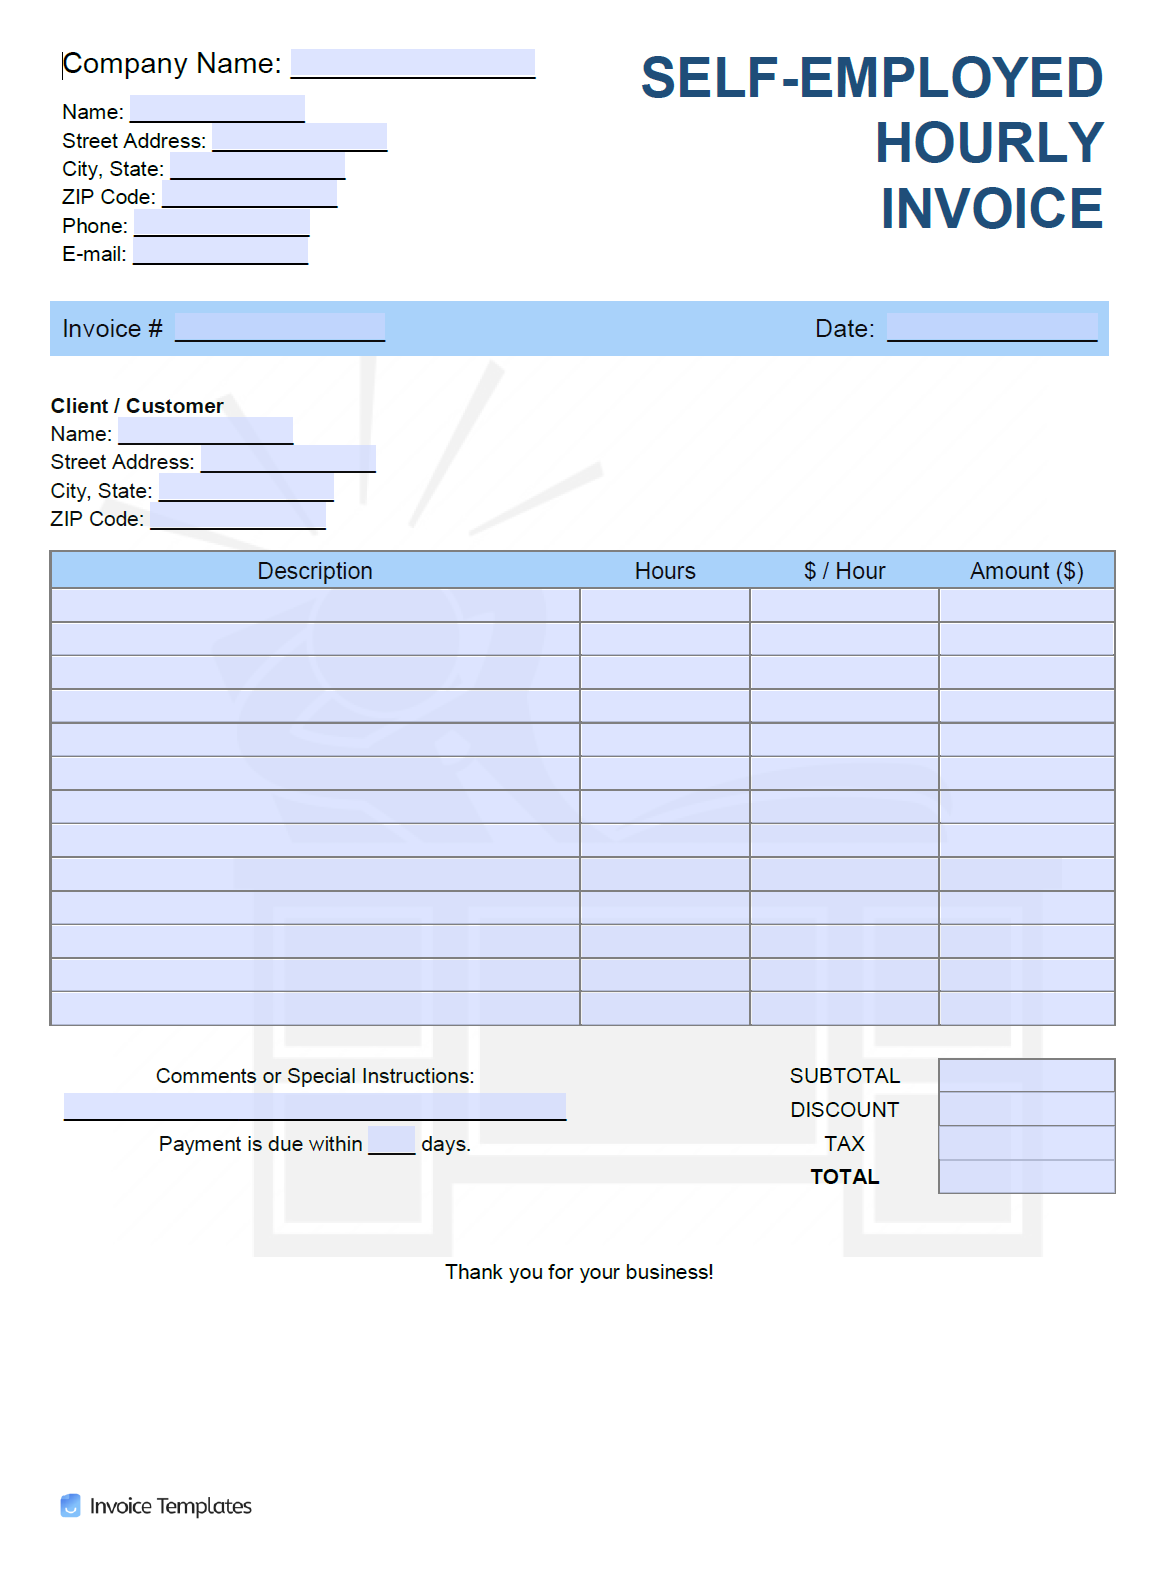 blank-self-employed-invoice-template-pdfsimpli-free-10-self-employed